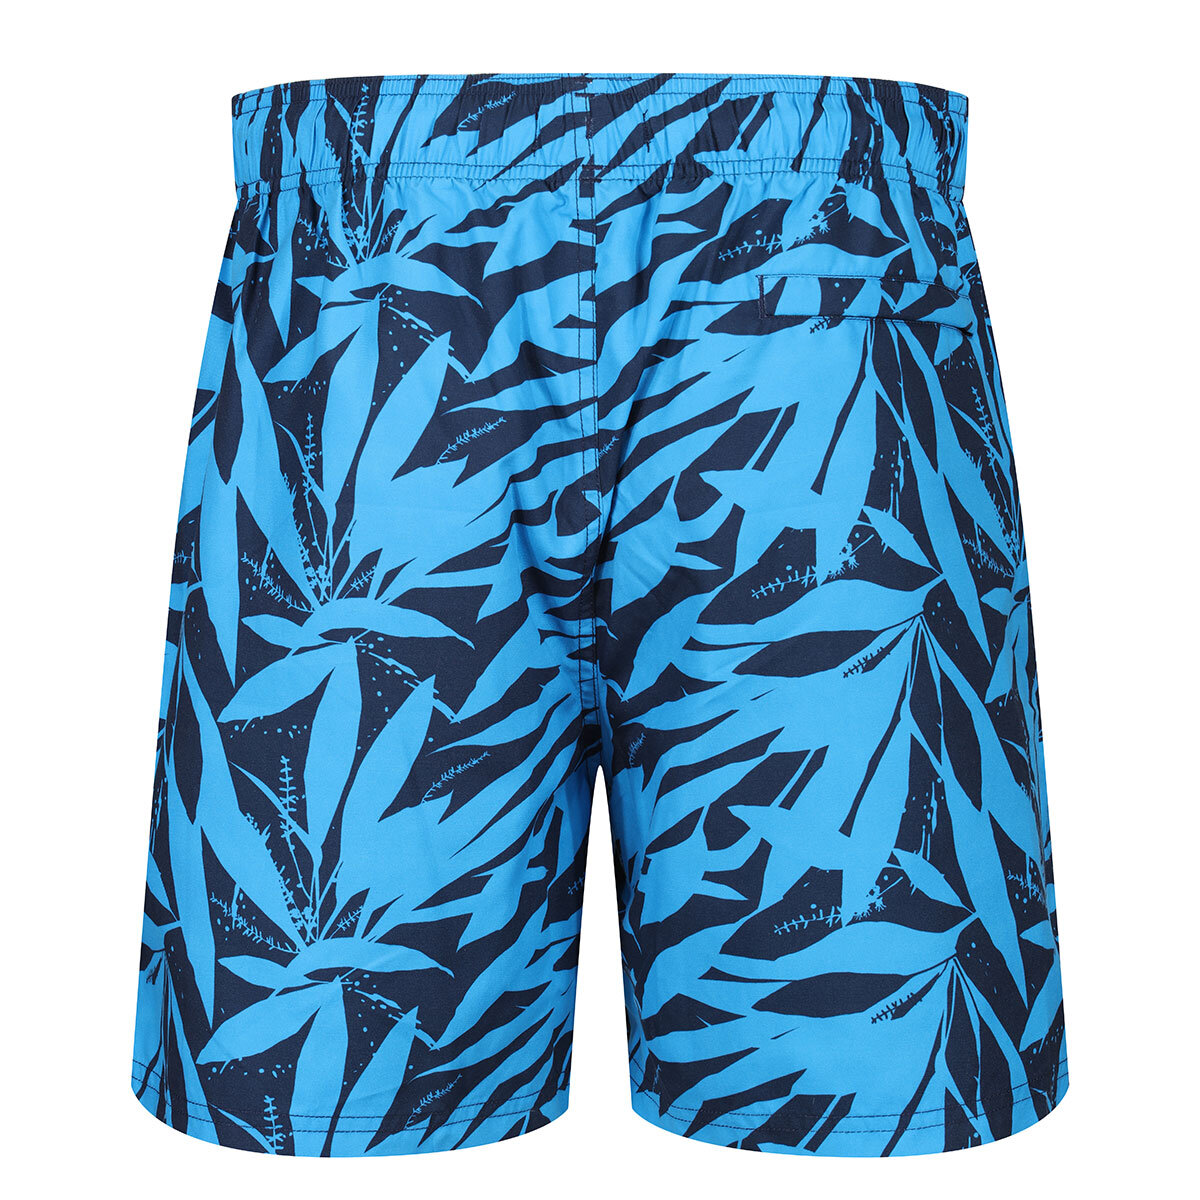 DKNY Mens Swim Shorts in Blue Leaf